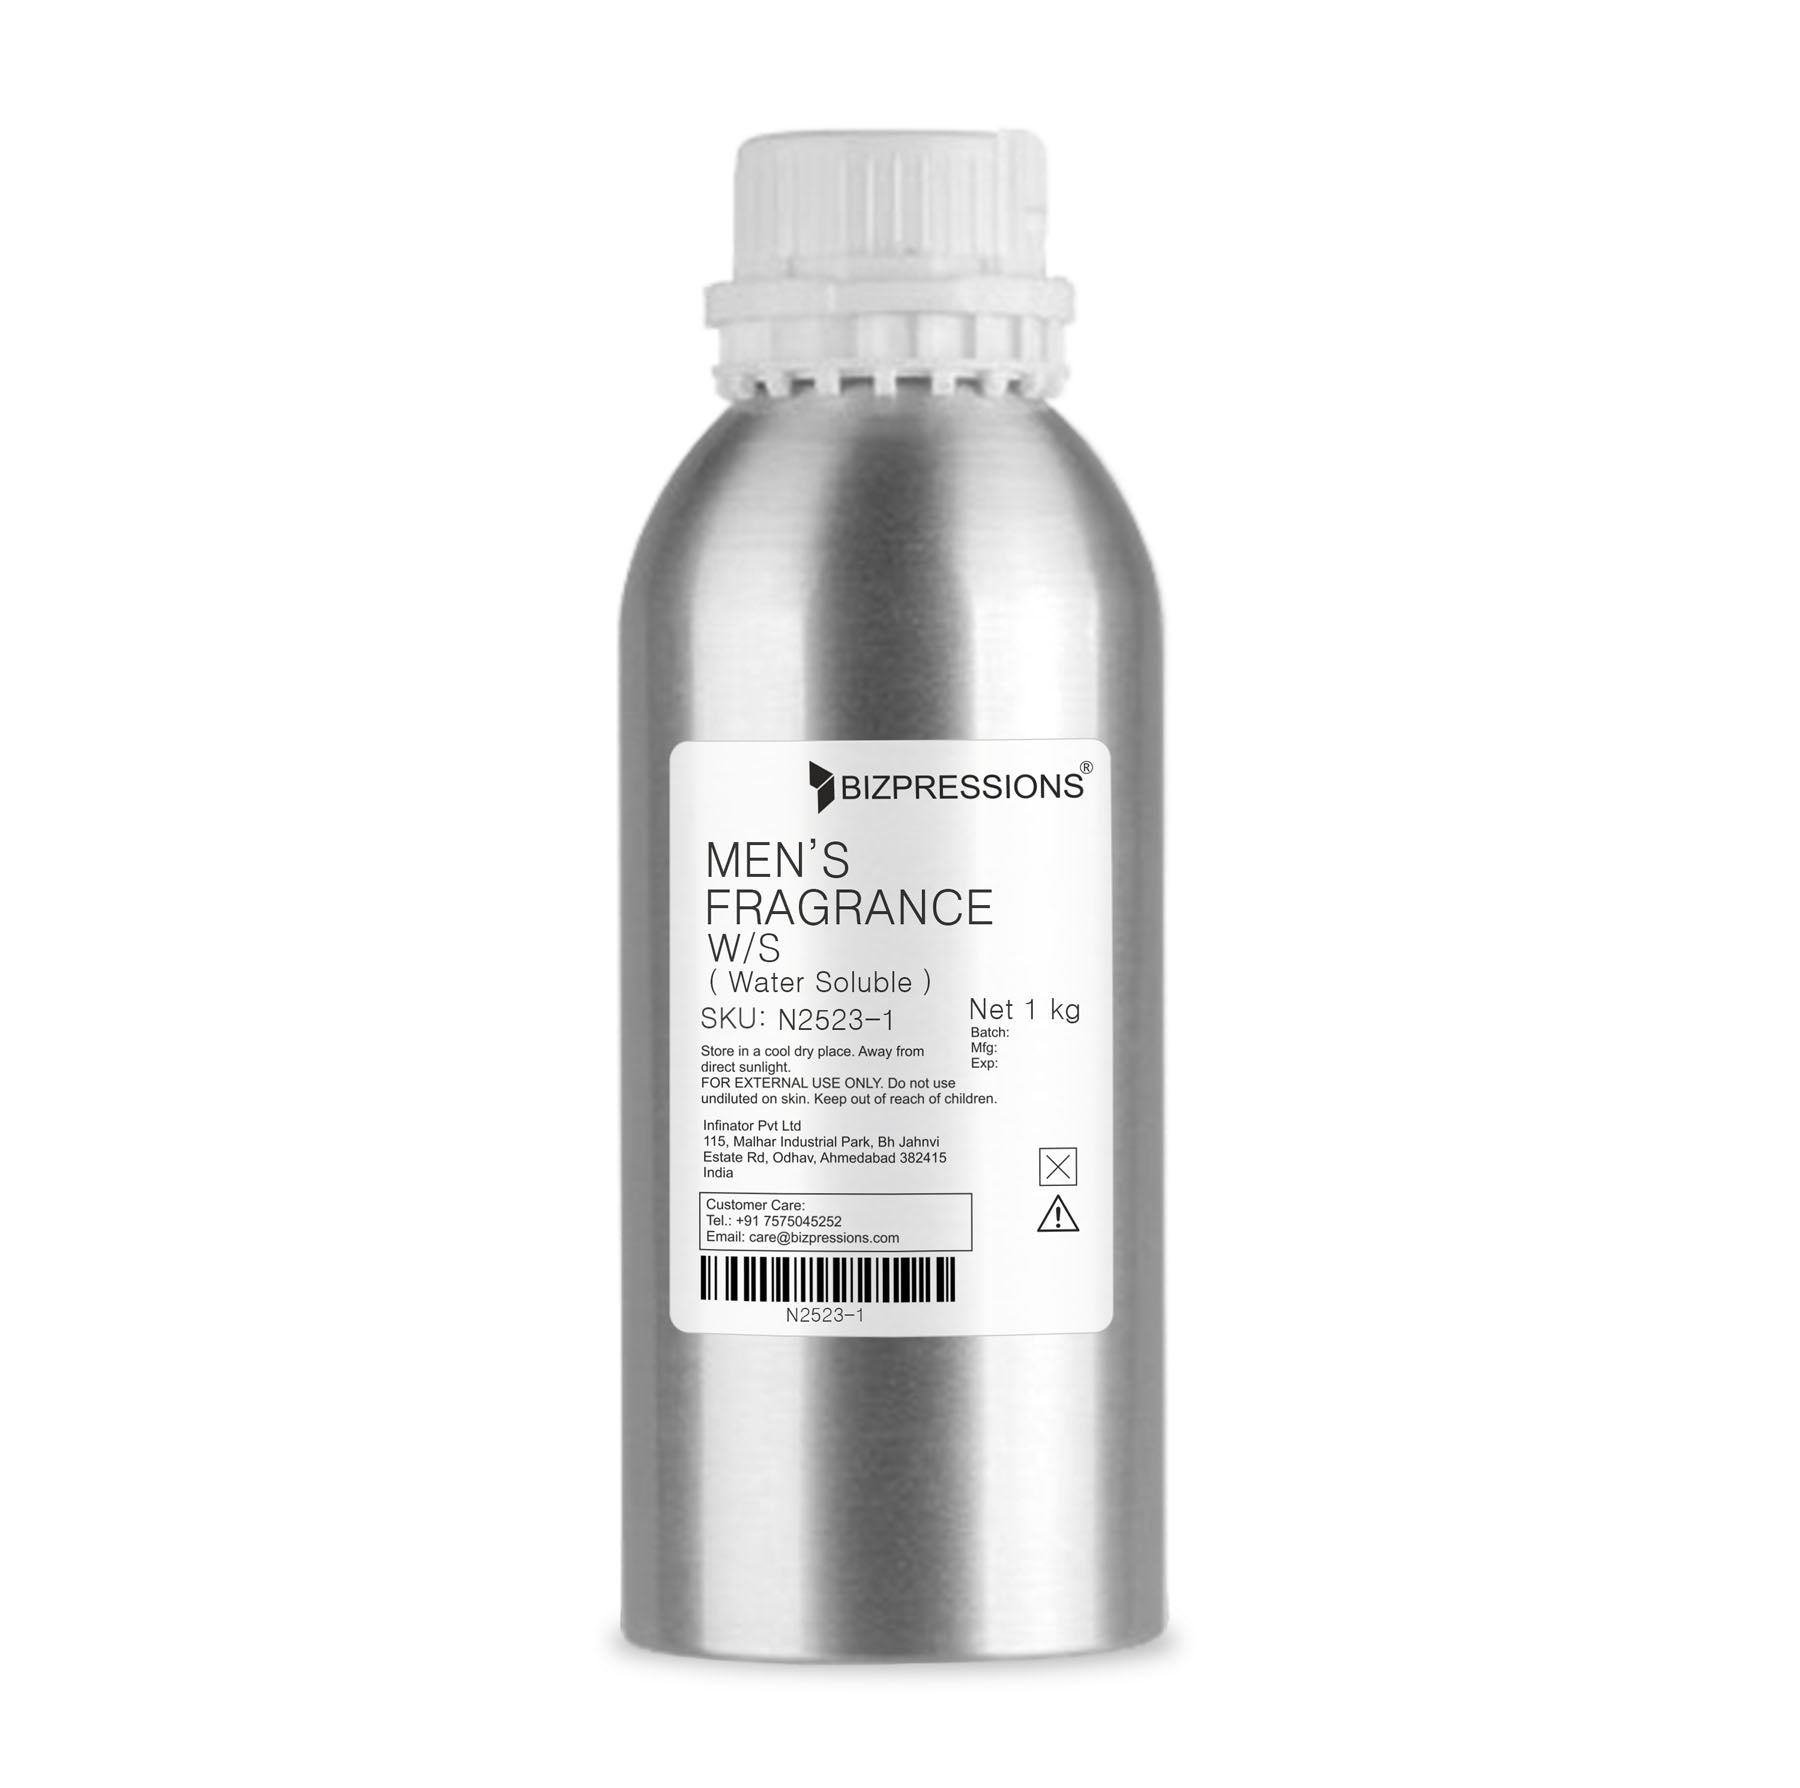 MEN'S FRAGRANCE W/S - Fragrance ( Water Soluble ) - 1 kg